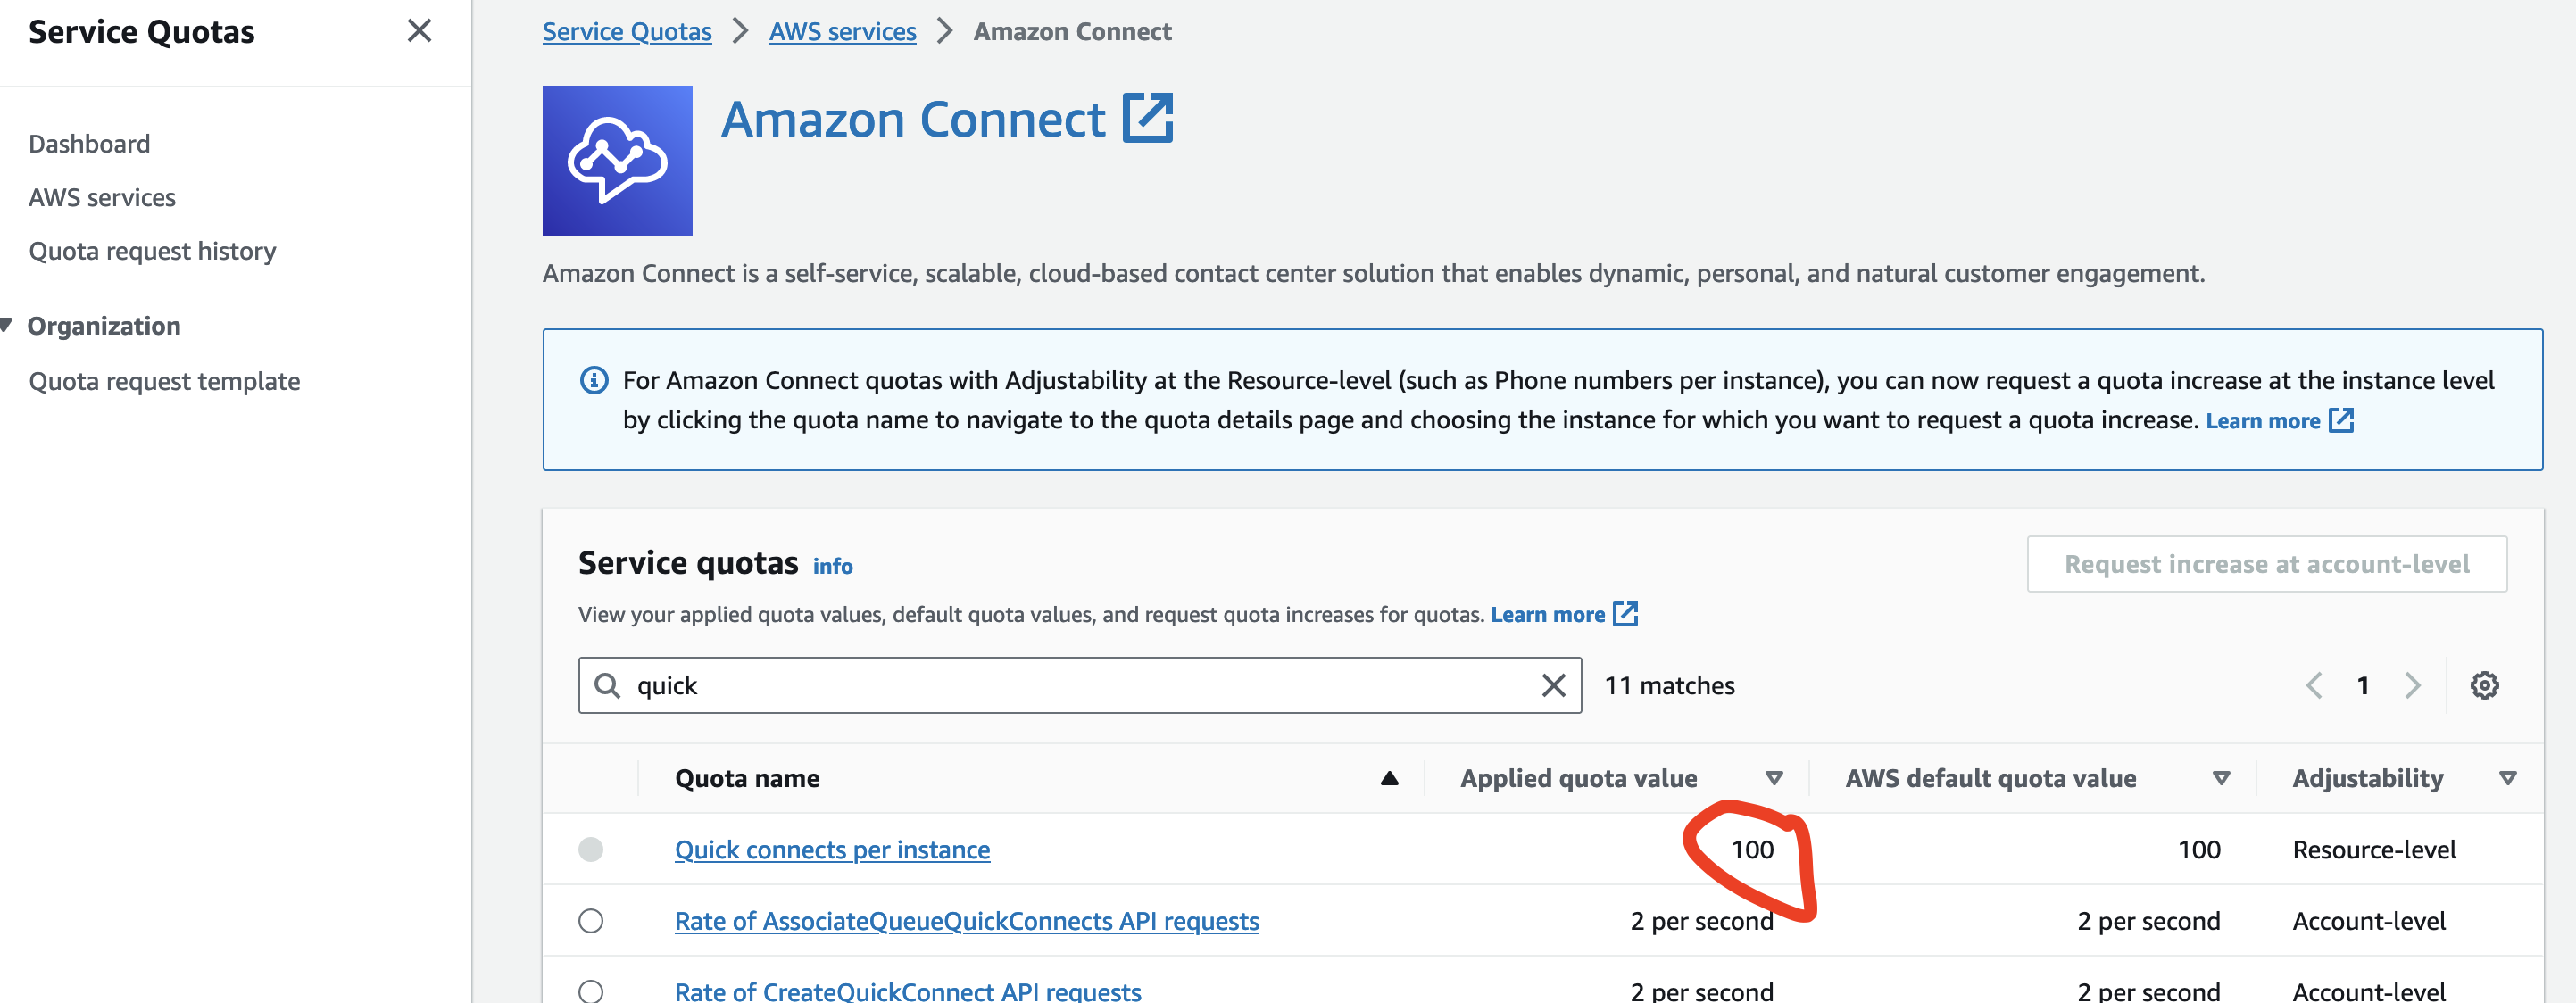 Amazon Connect Service Quotas